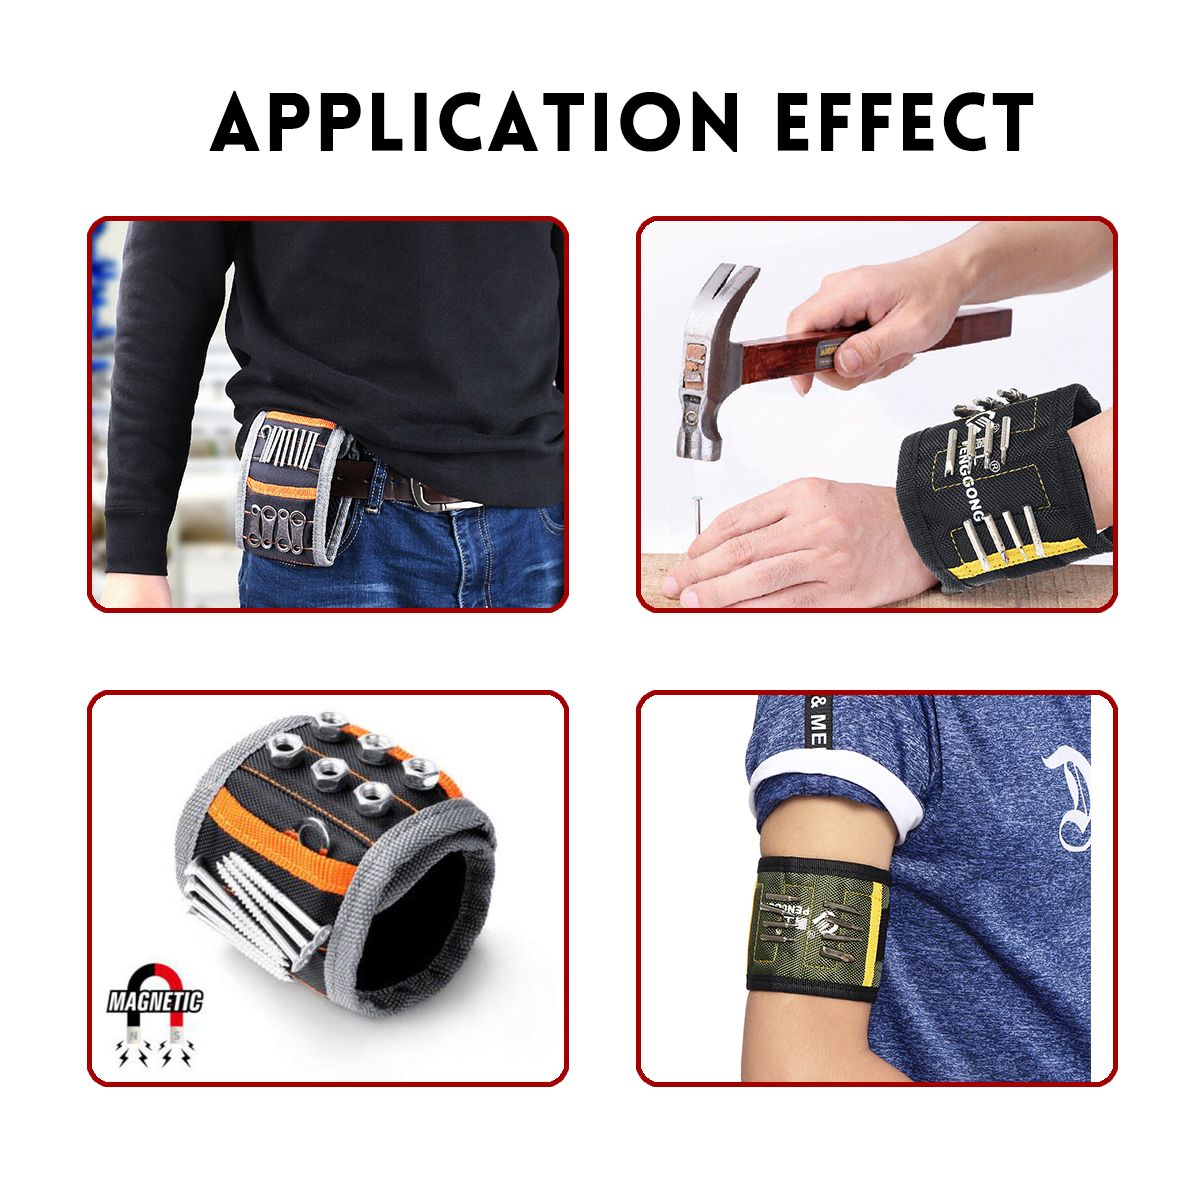 Magnetic-Wrist-Band-Magnet-Strap-Tool-Holder-Belt-Screws-Bolts-Nuts-Nails-1488958